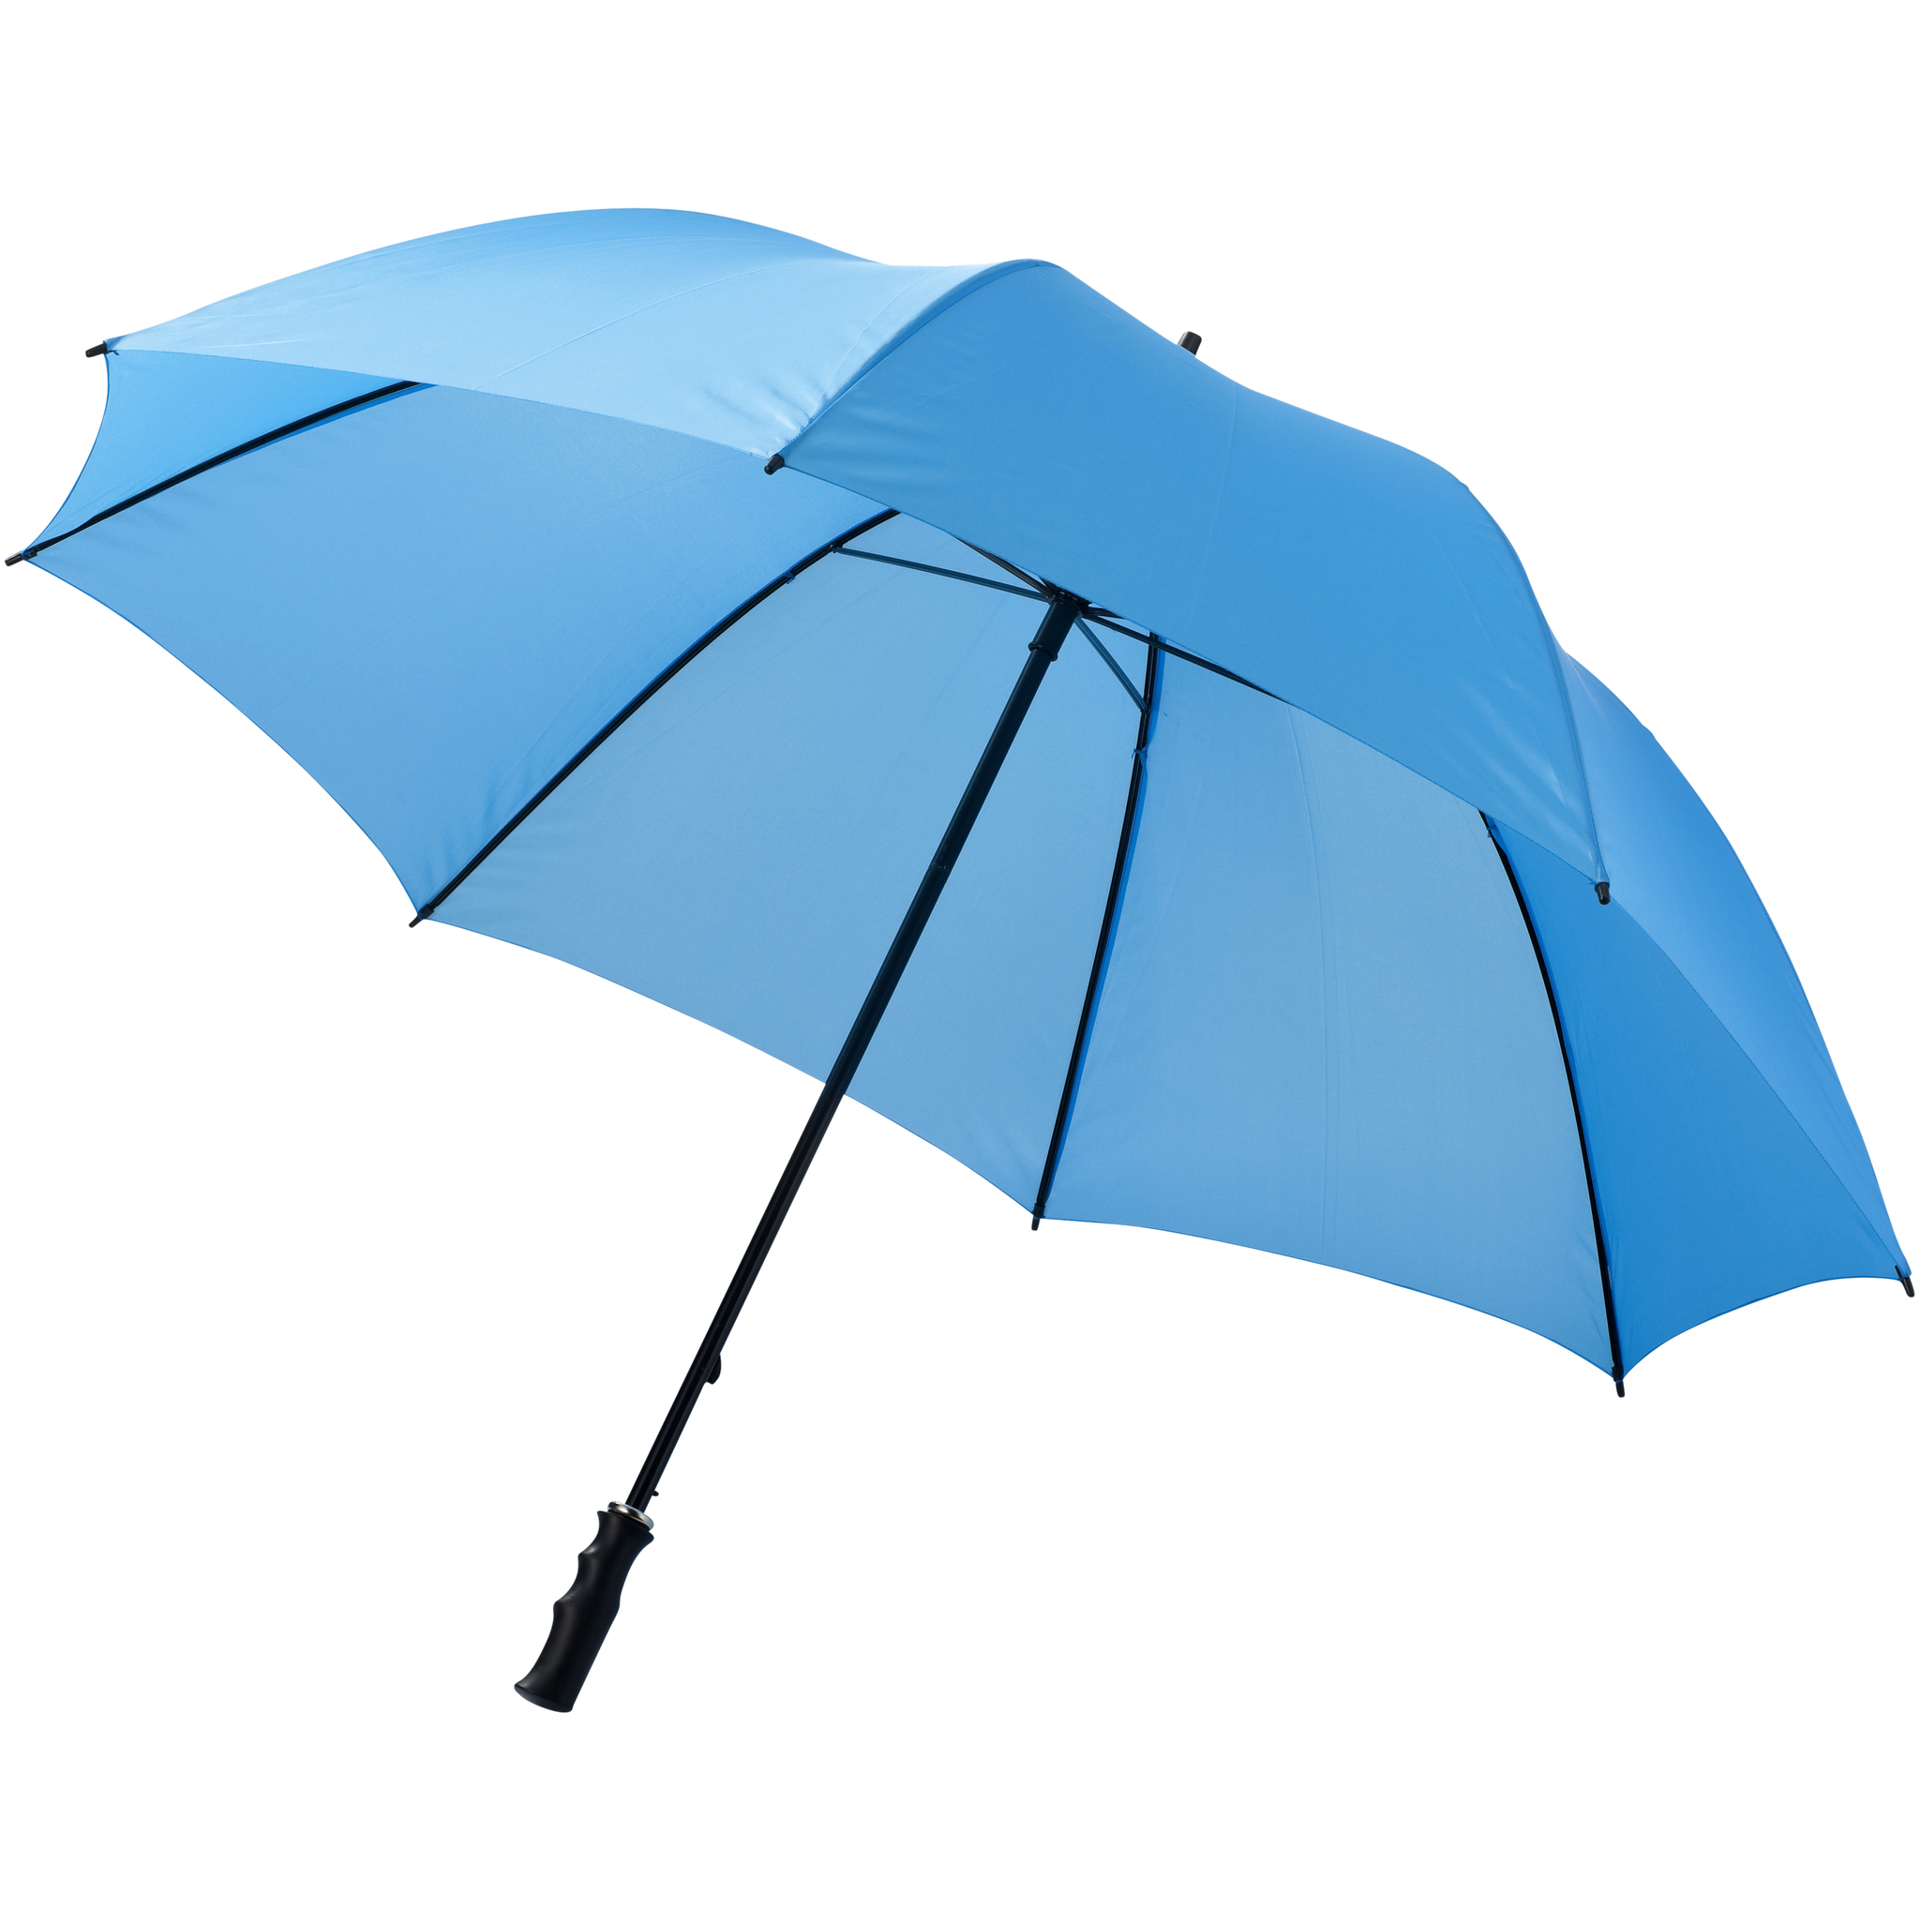 30 inch Golf Umbrella in light blue